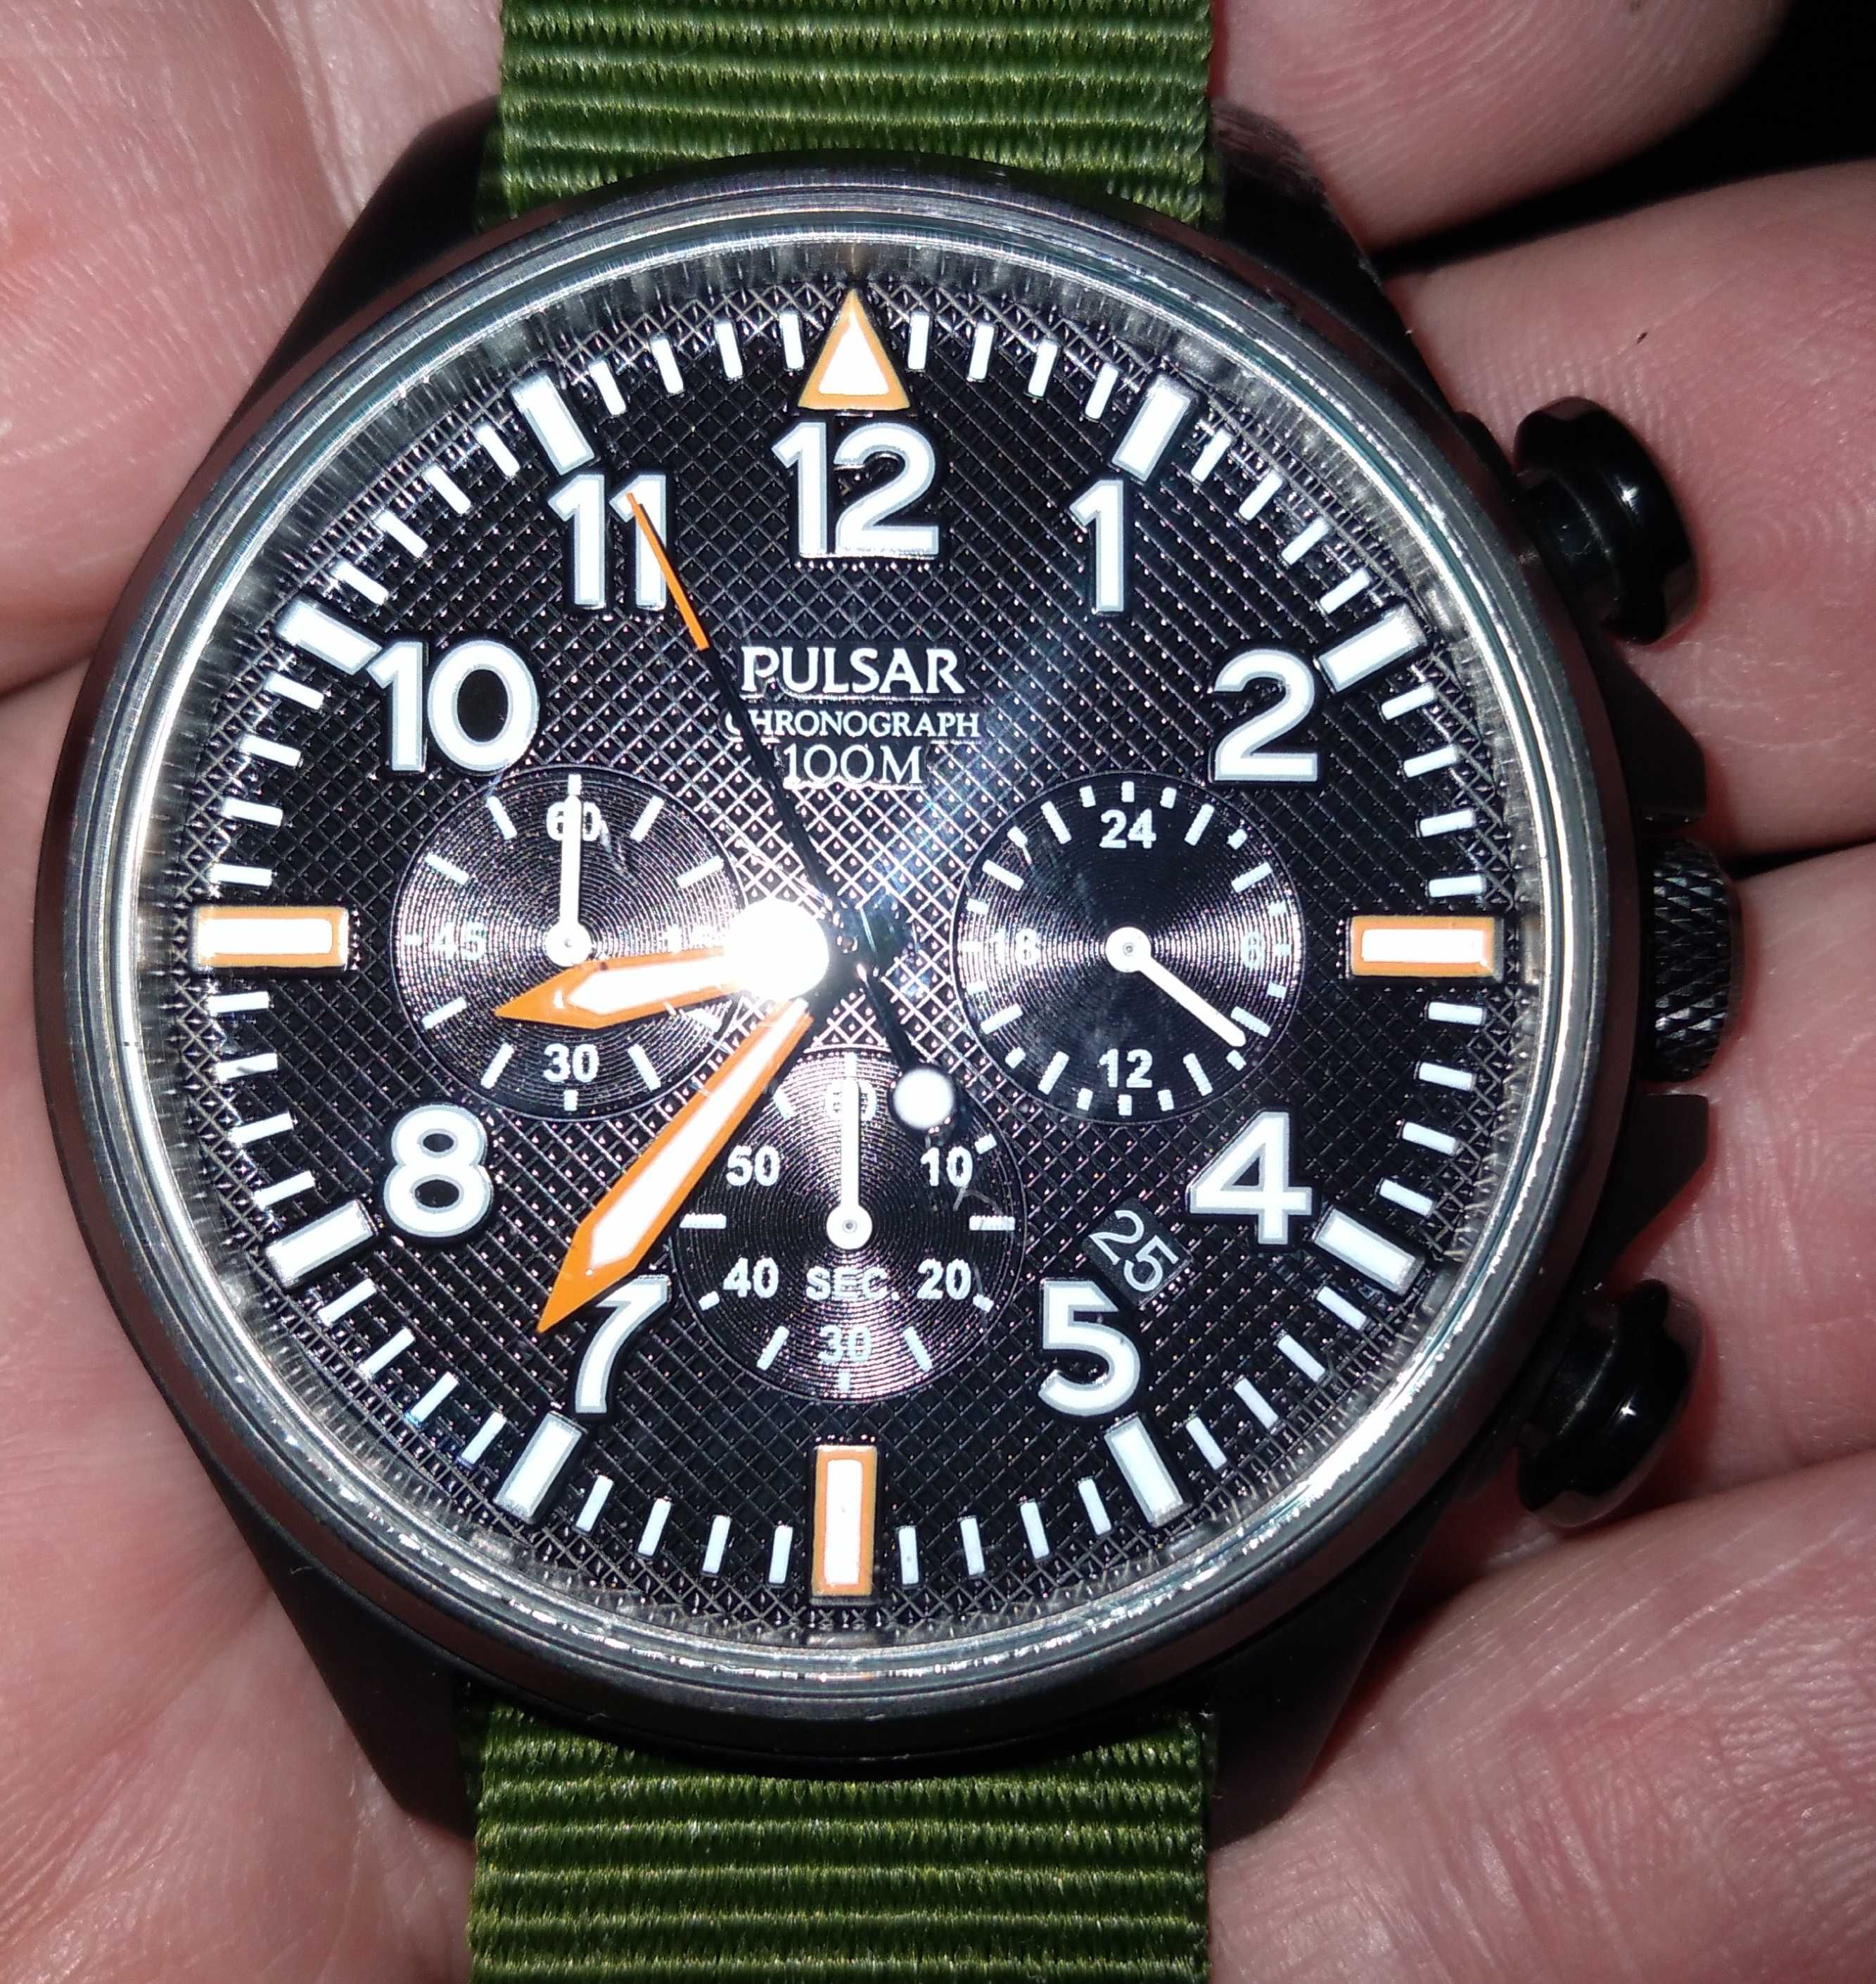 Zegarek Pulsar by Seiko military na Japonie100wr.chronograf,pasek NATO